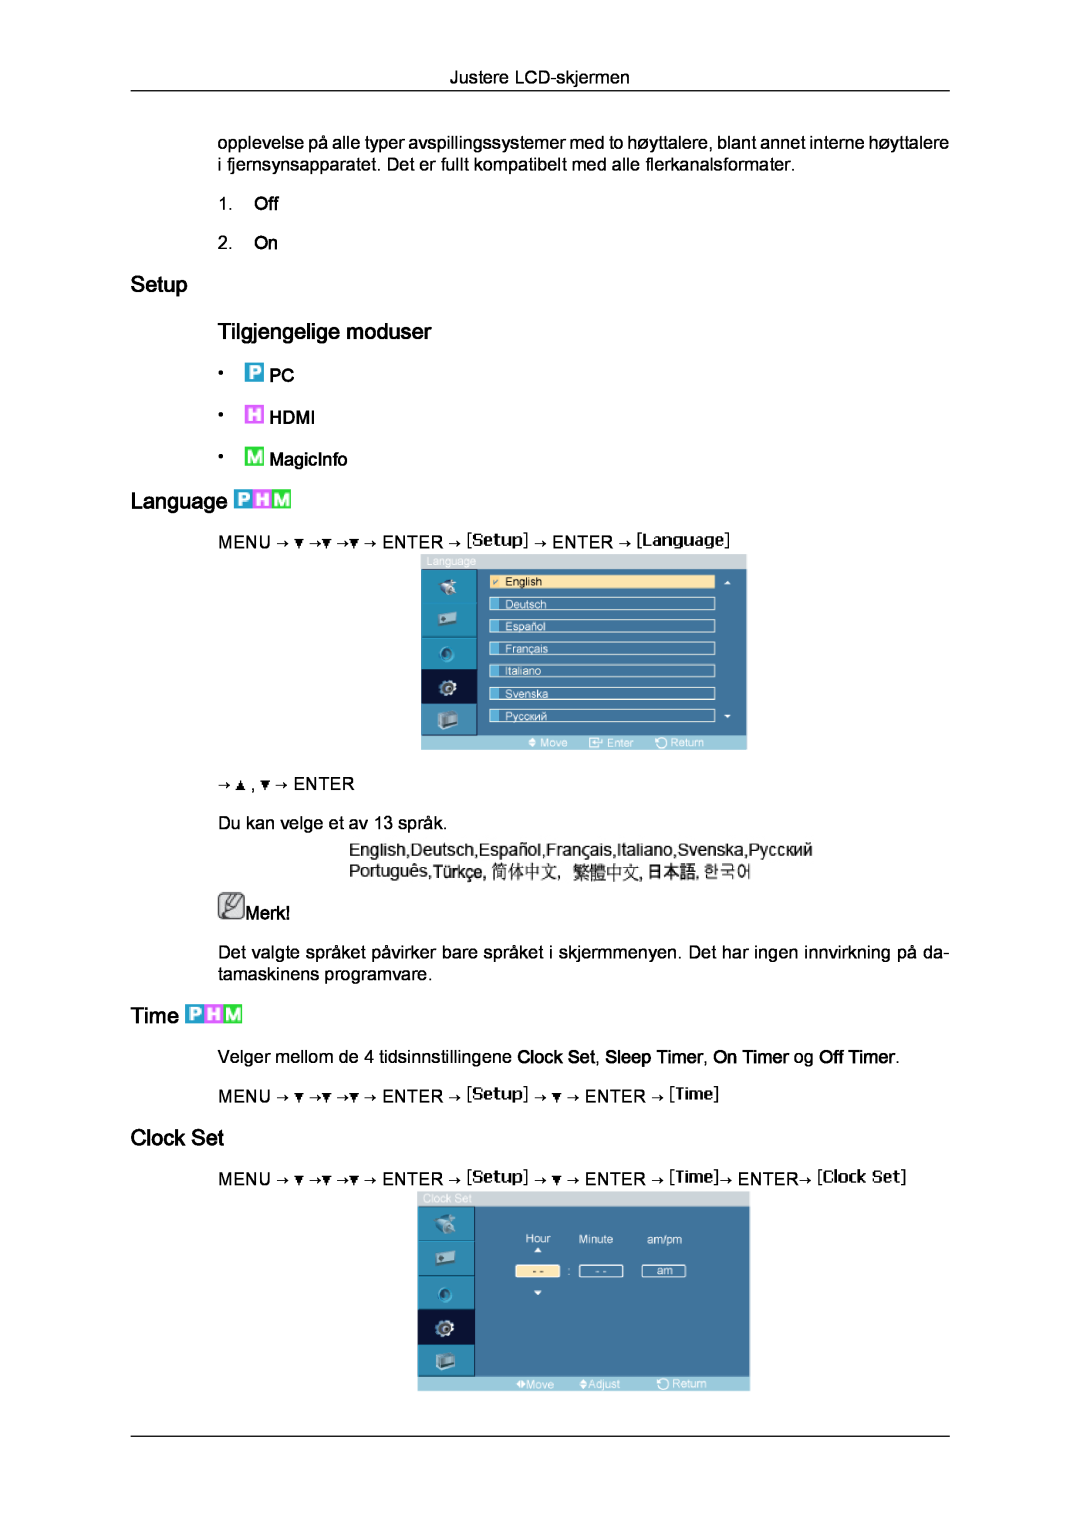 Samsung LH23PTSMBC/EN manual Setup Tilgjengelige moduser, Language, Time, Clock Set, Off 2. On, PC HDMI MagicInfo, Merk 